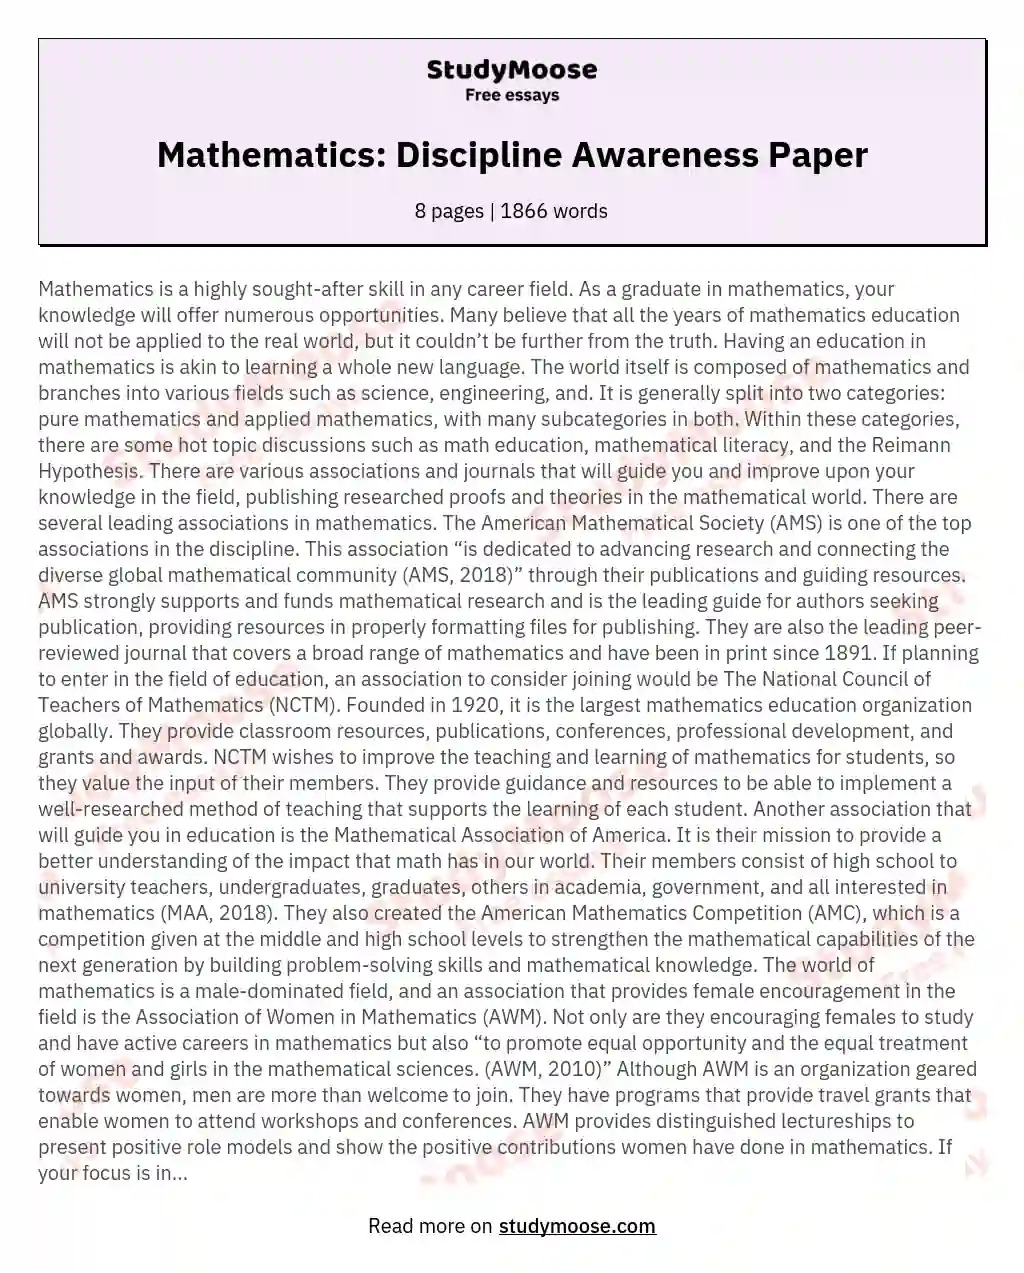 Mathematics: Discipline Awareness Paper essay